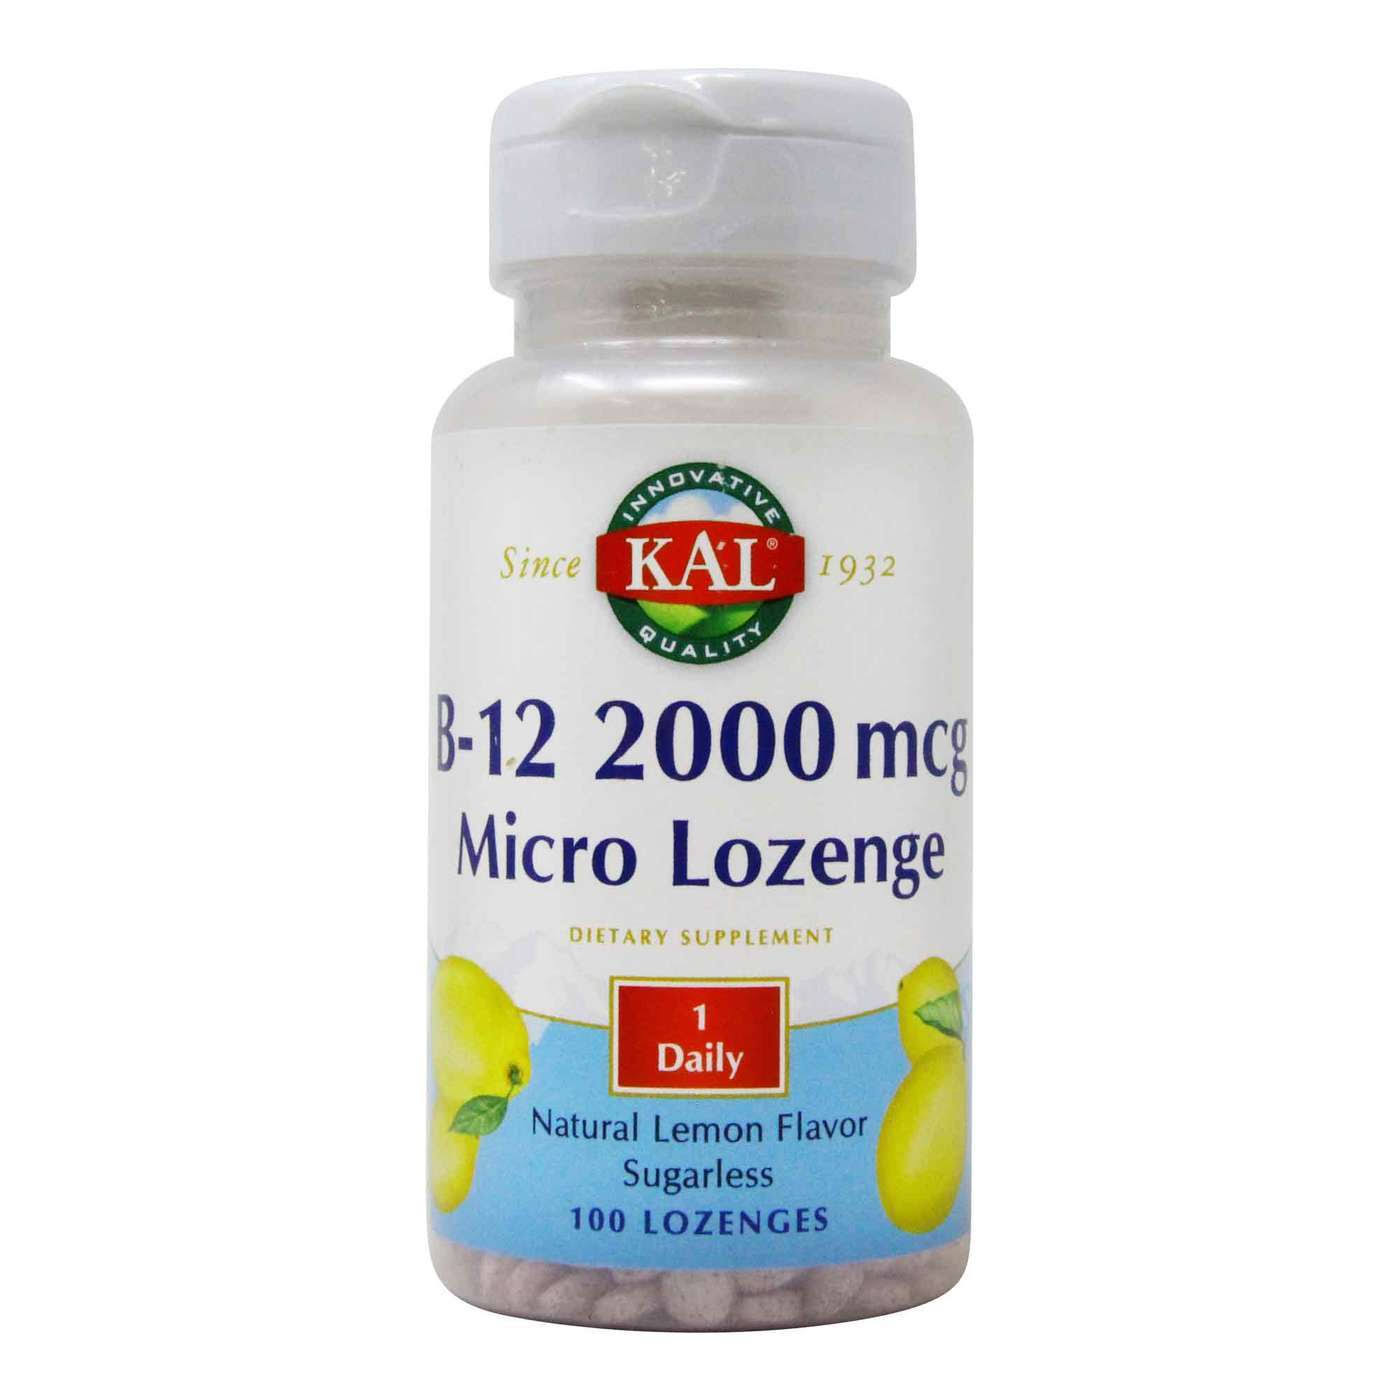 Kal B-12 Micro Lozenge Supplement - 100ct, 2000mcg